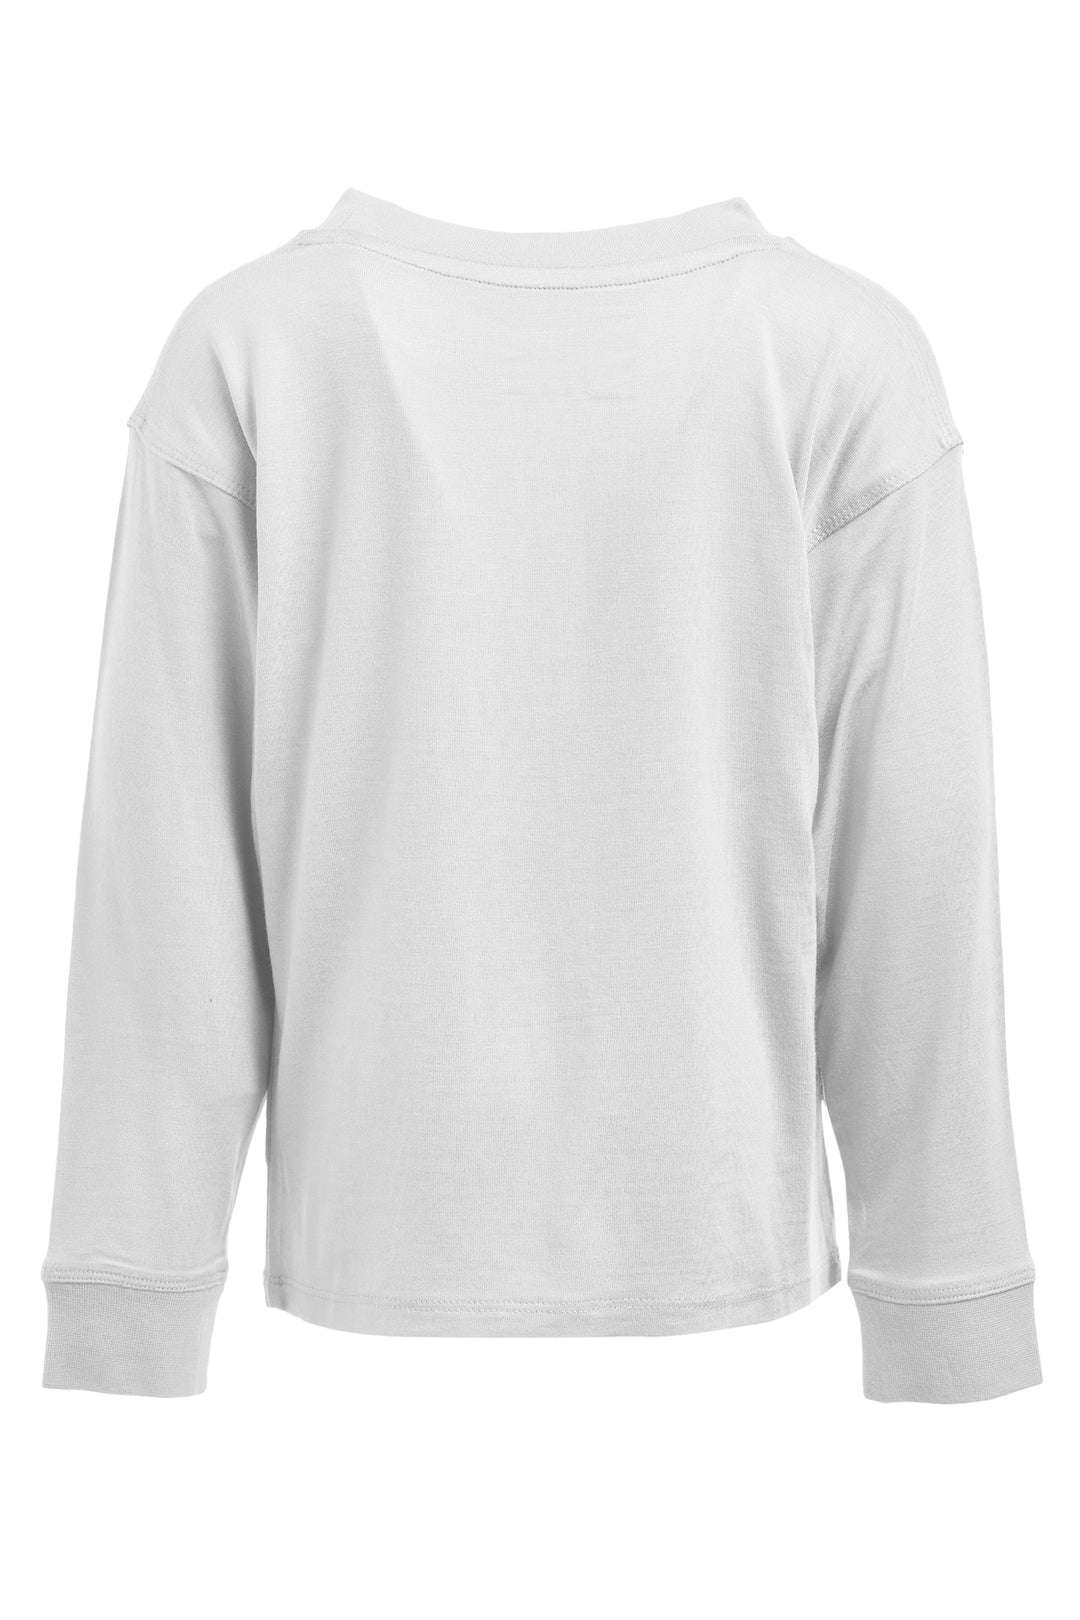 Viscose Long Sleeve T-Shirt [Junior]